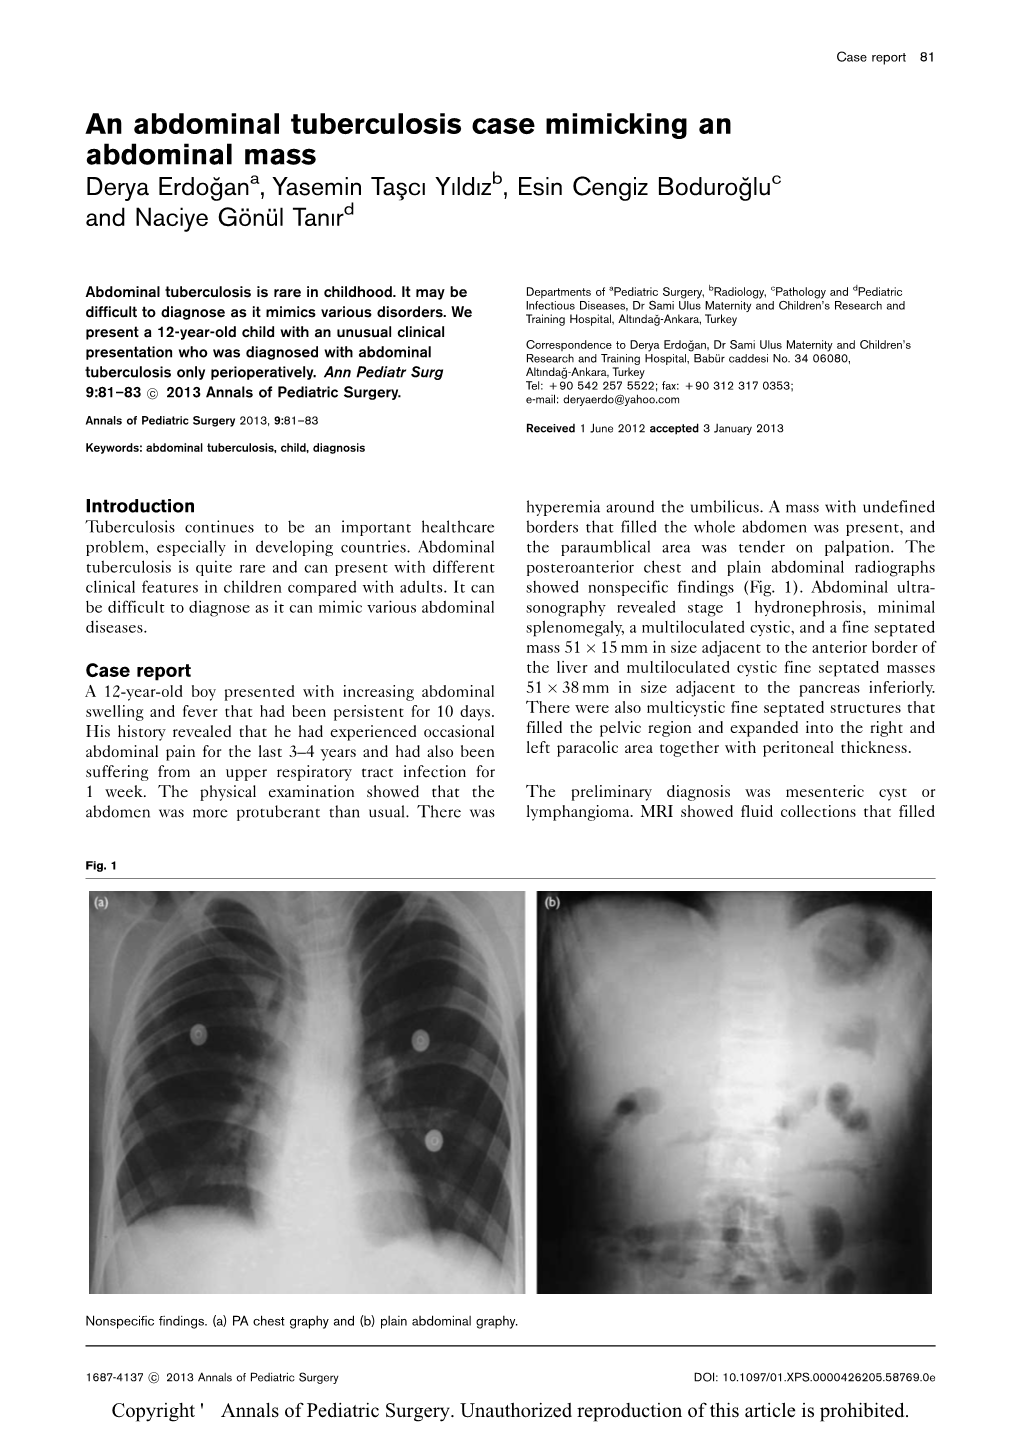 An Abdominal Tuberculosis Case Mimicking an Abdominal Mass Derya Erdog˘ Ana, Yasemin Tascı¸ Yıldızb, Esin Cengiz Bodurog˘ Luc and Naciye Go¨ Nu¨L Tanırd